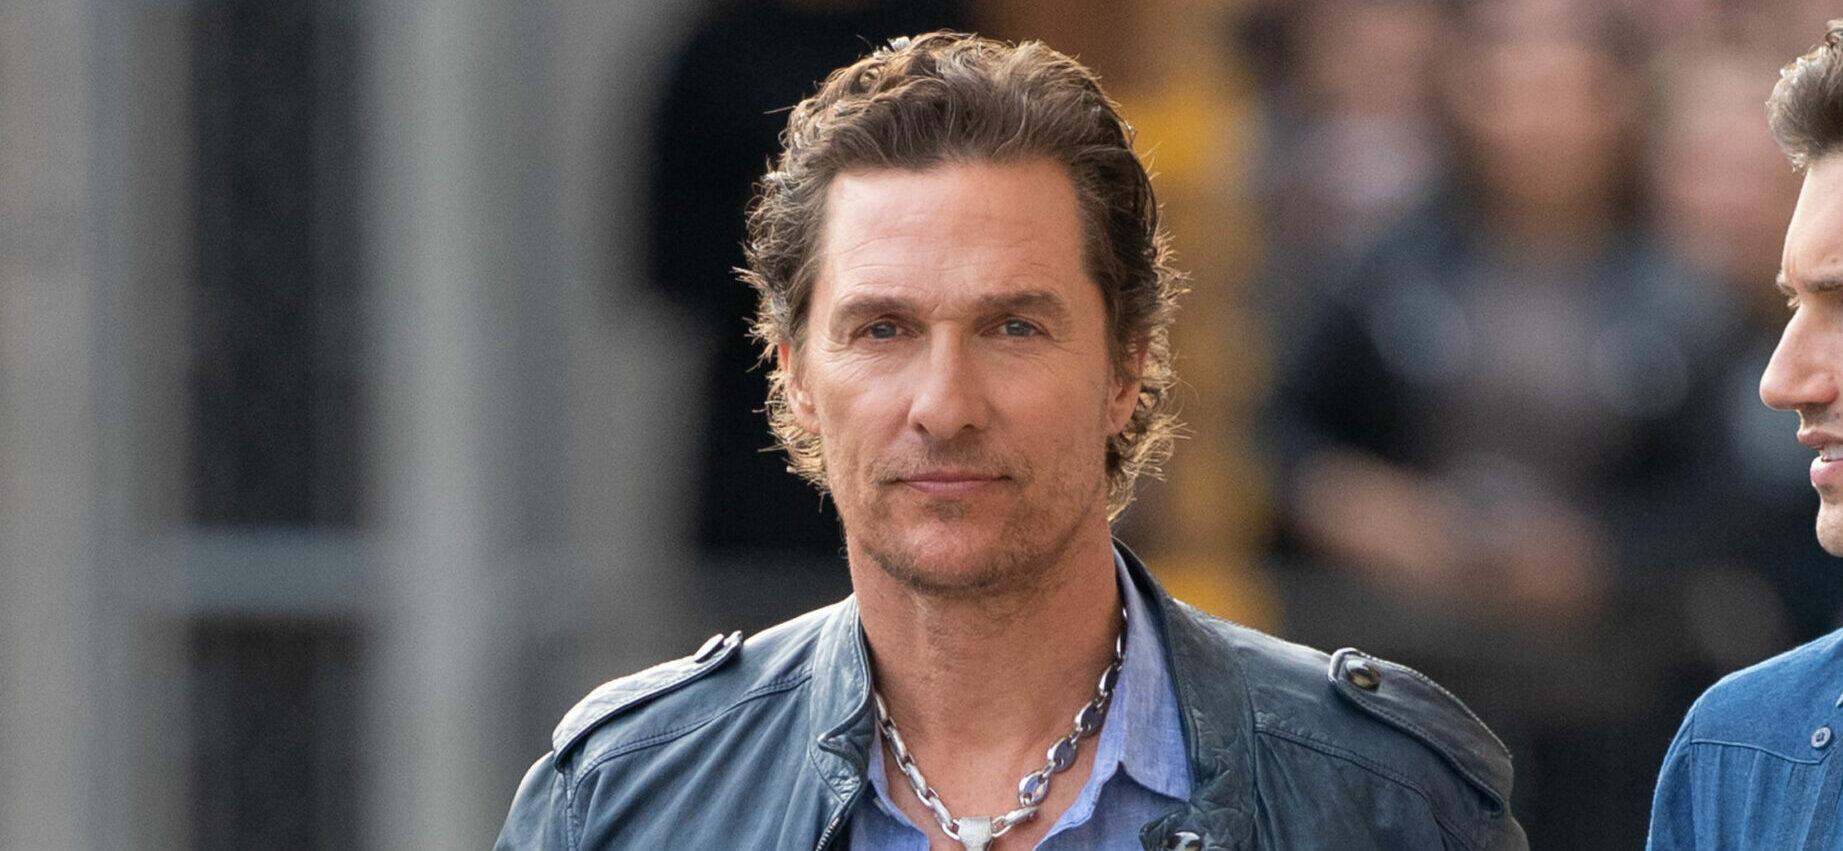 Matthew McConaughey at Jimmy Kimmel